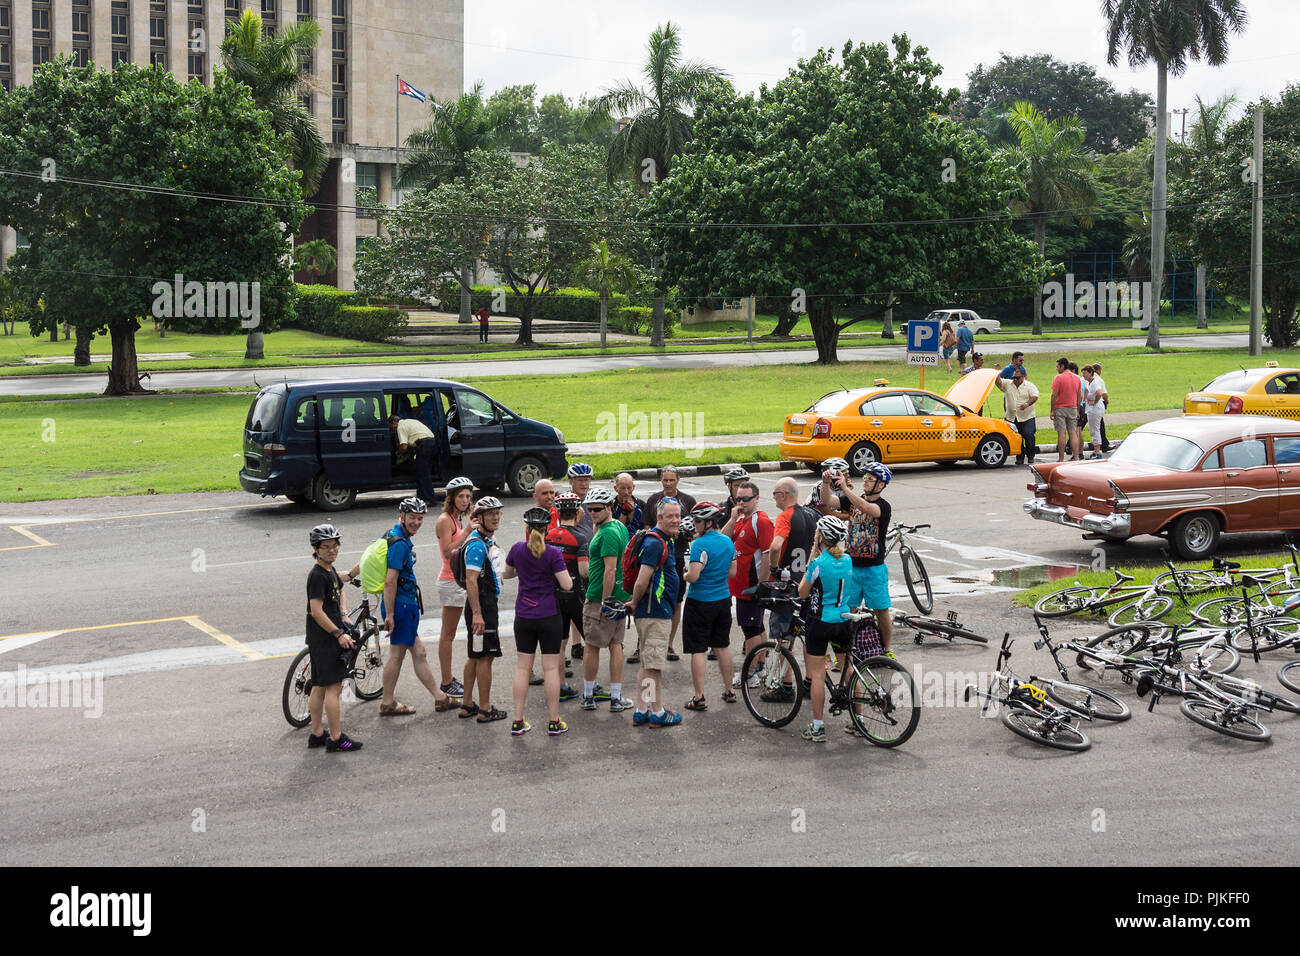 Cuba, Havana, La Habana, Plaza de la Revolución / Revolution Square, cyclists, group Stock Photo